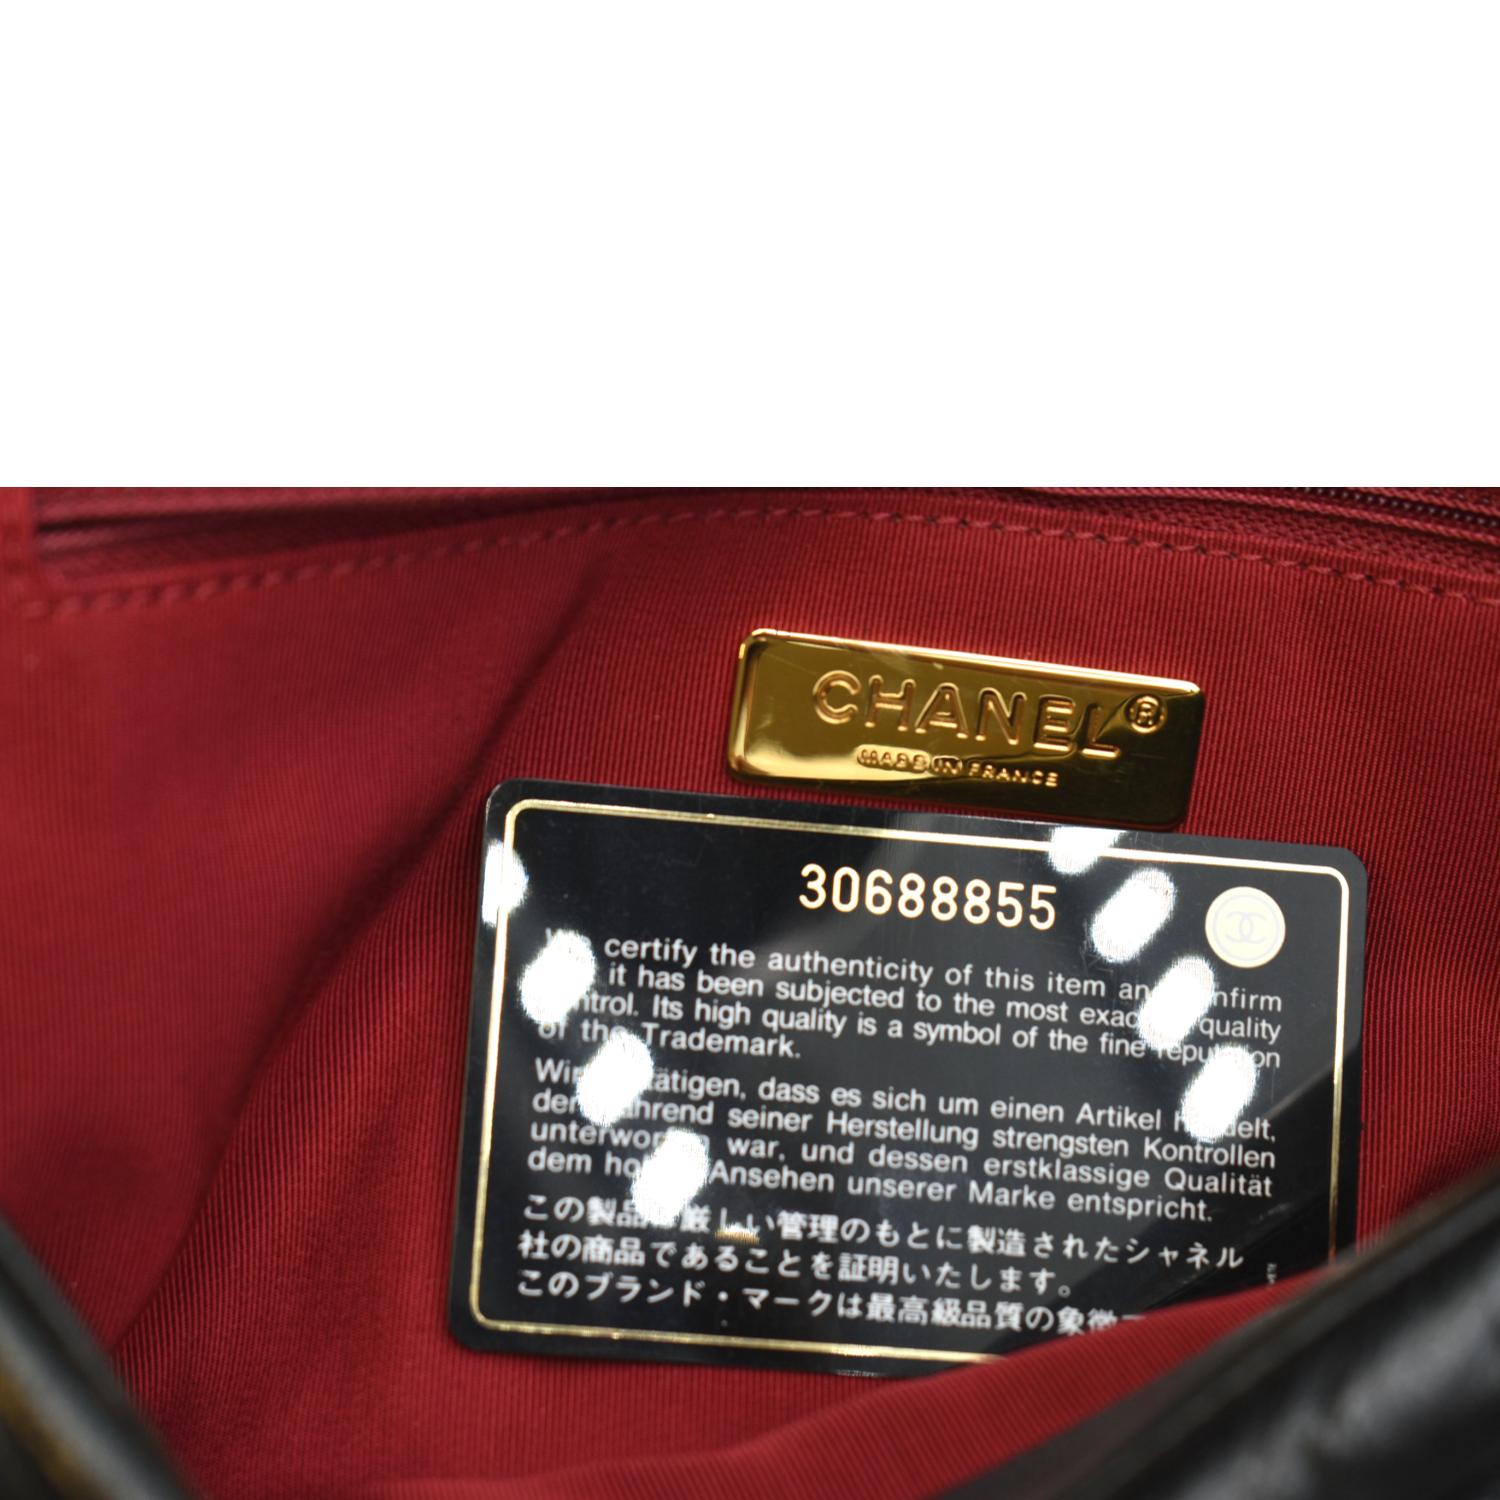 Chanel 19 leather handbag Chanel Black in Leather - 27451514